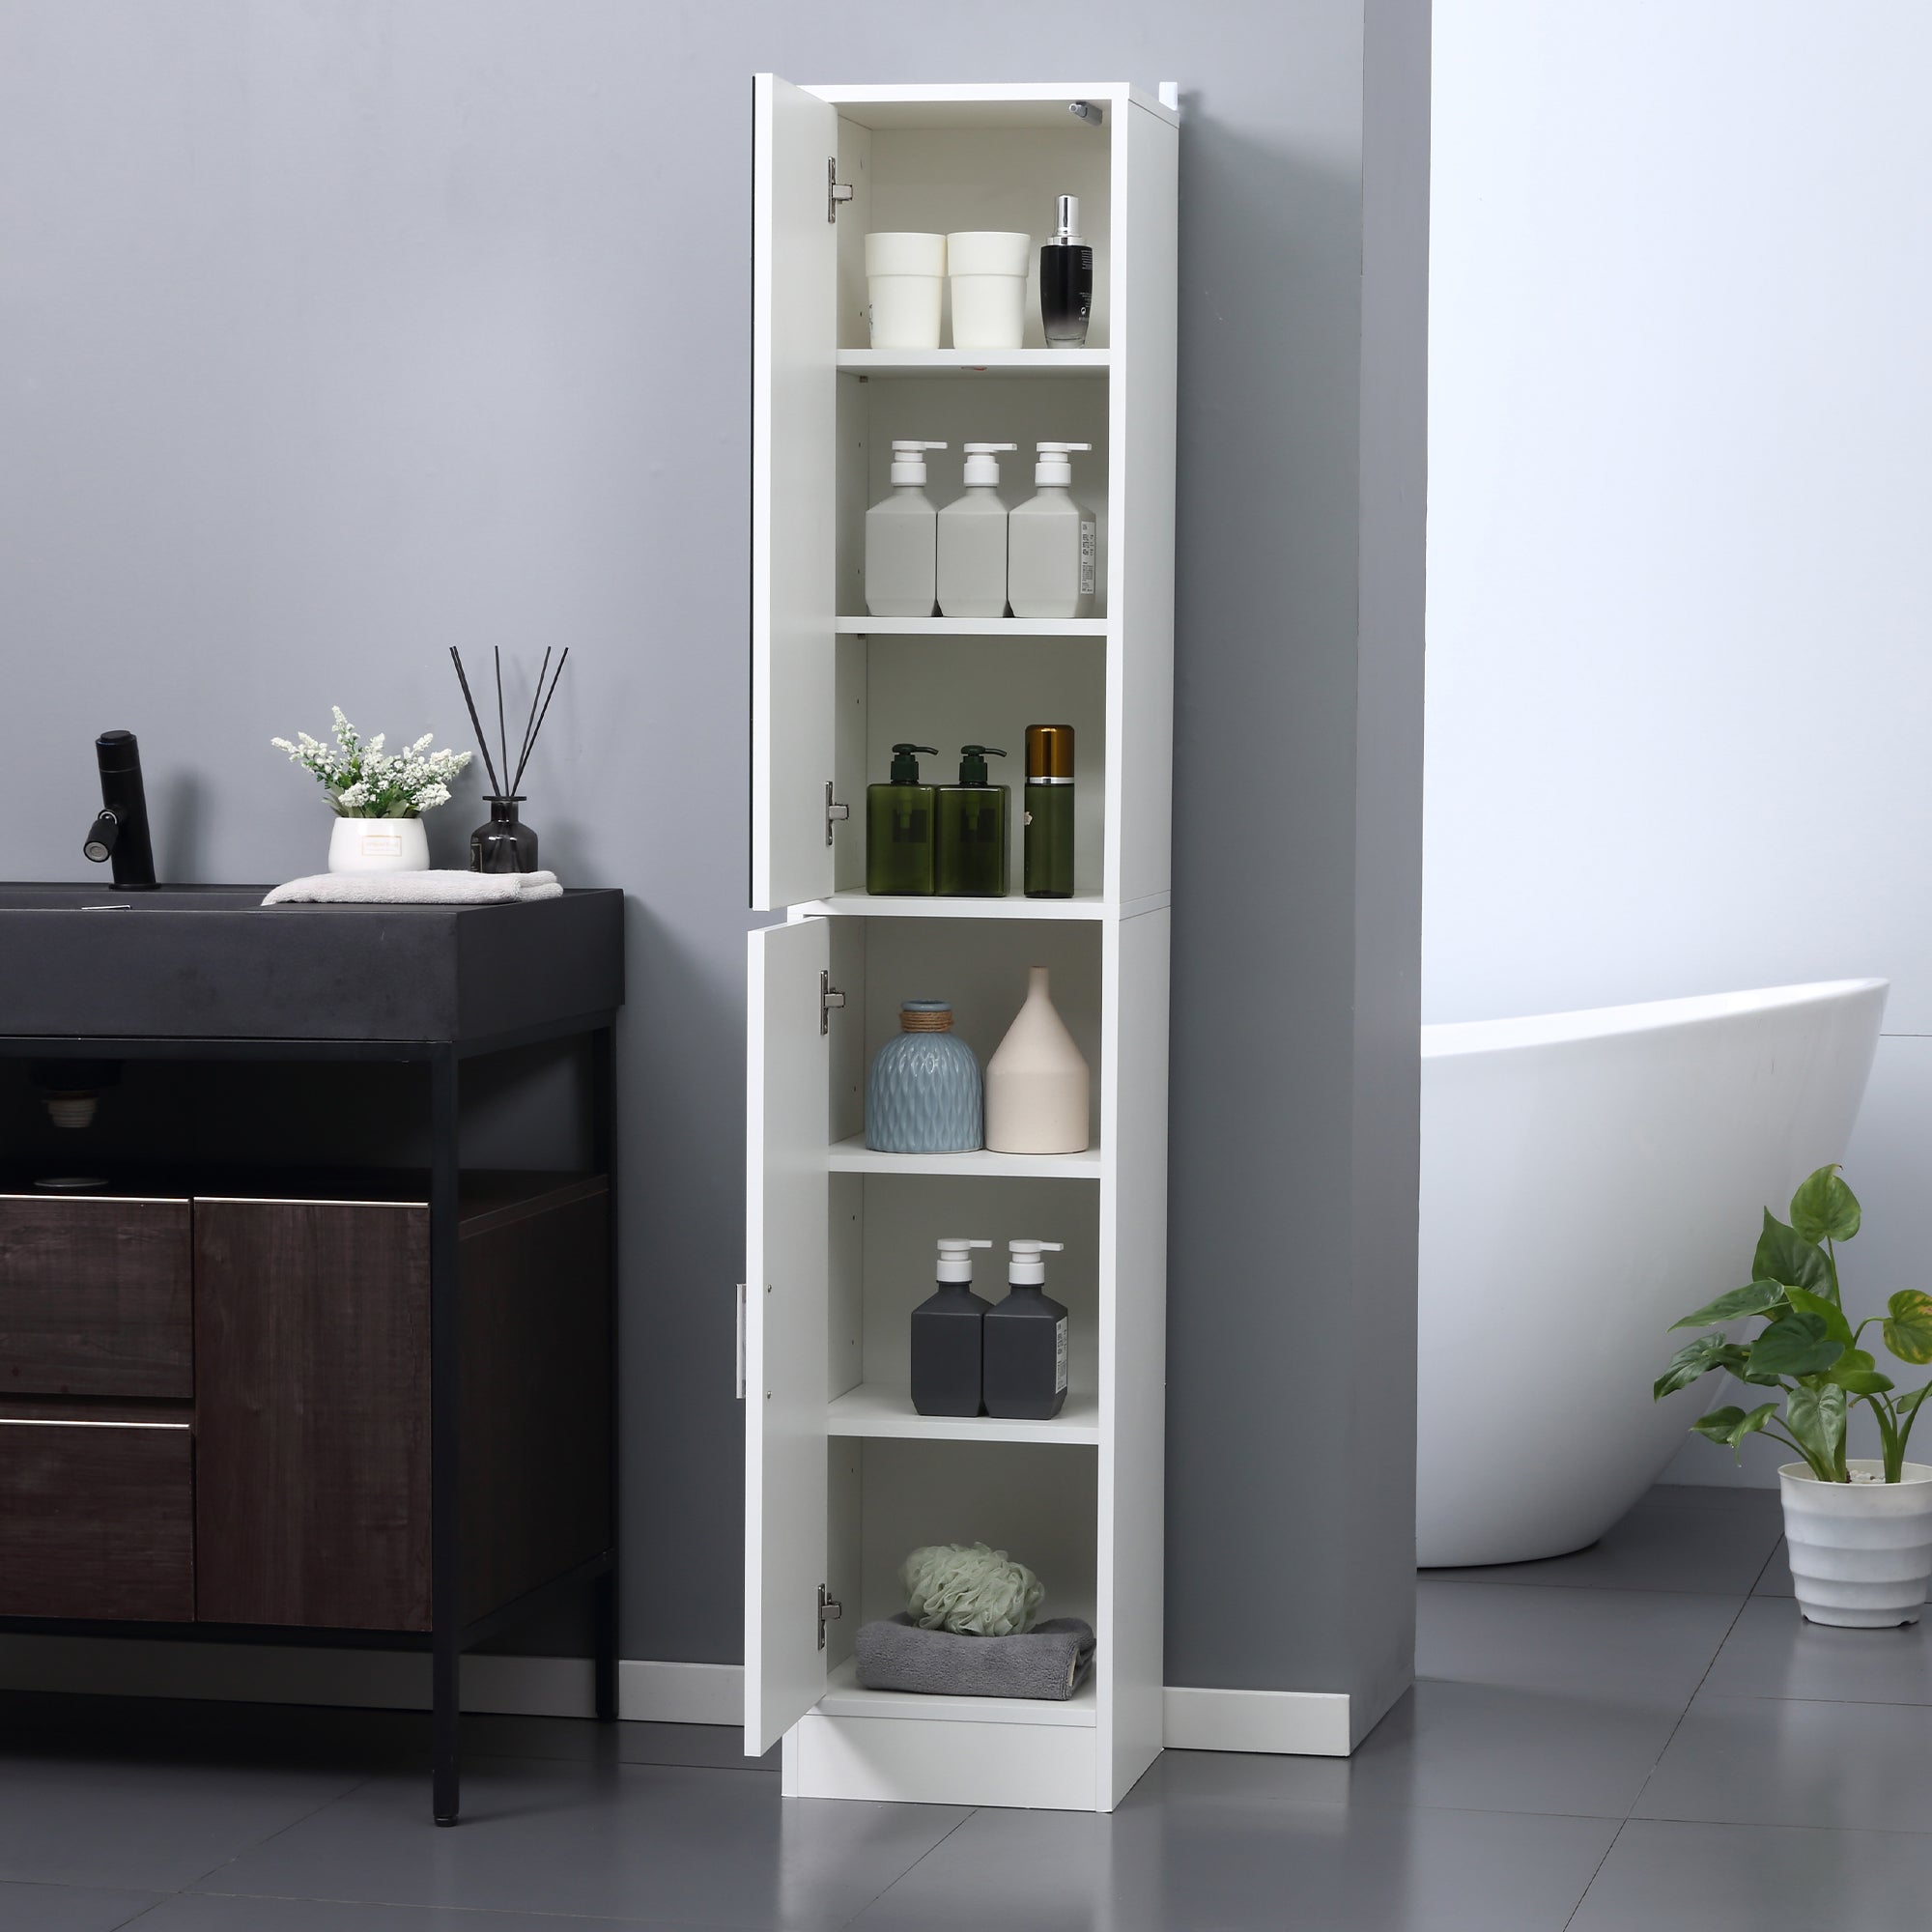 kleankin Tall Mirrored Bathroom Cabinet, Bathroom Storage Cupboard, Floor Standing Tallboy Unit with Adjustable Shelf, White - TovaHaus